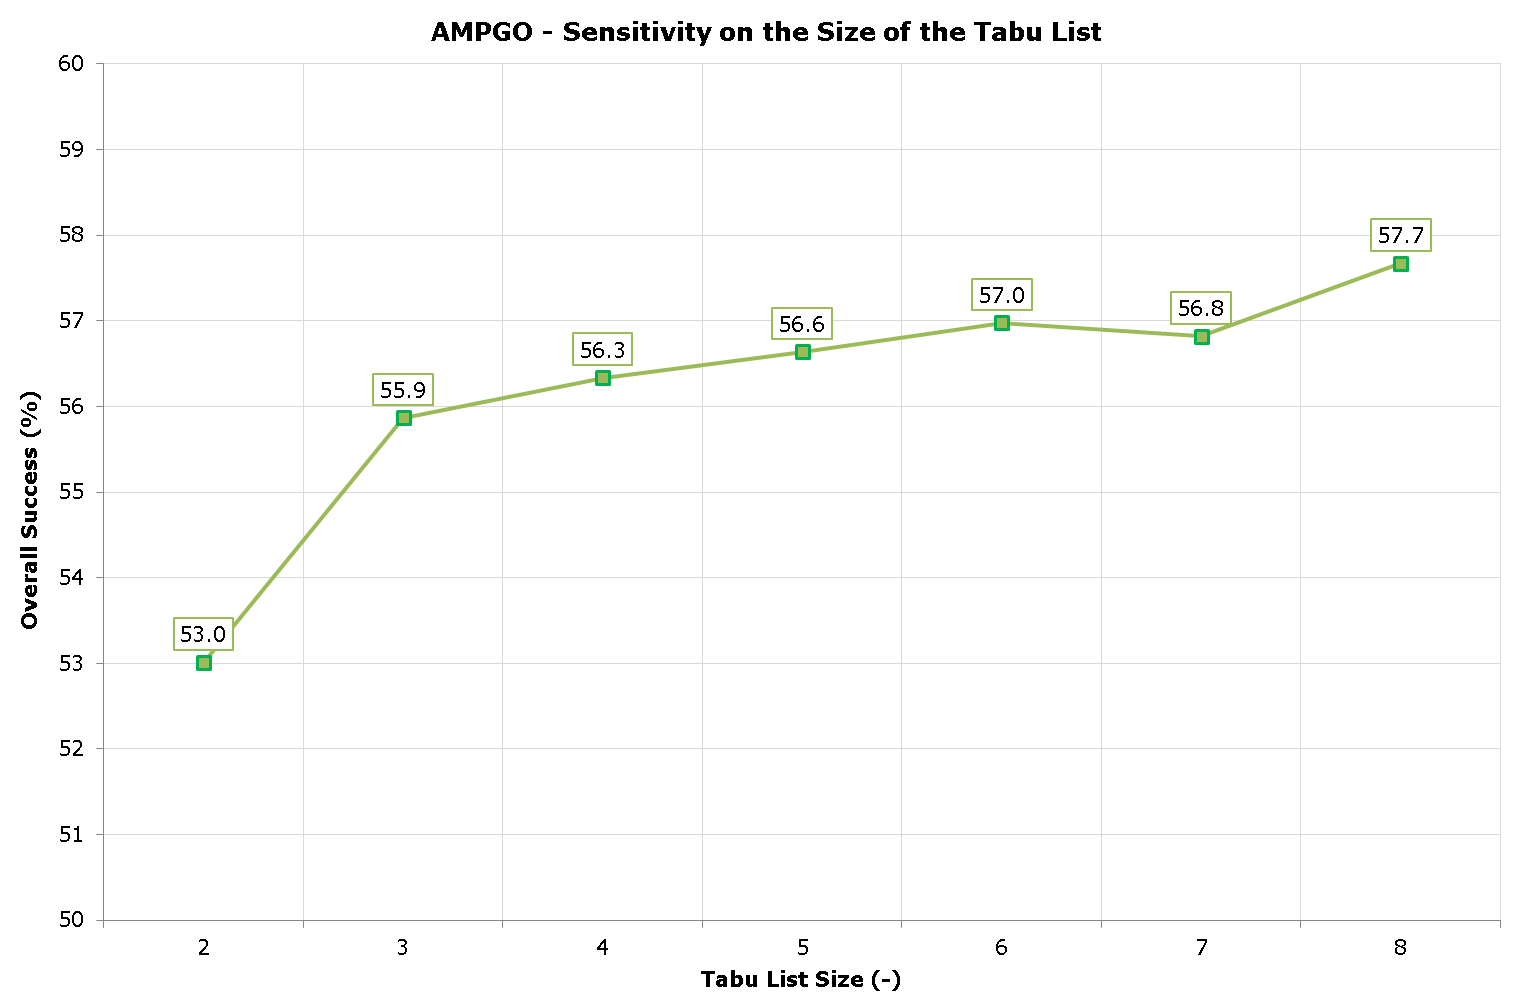 AMPGO Size of the tabu list sensitivity